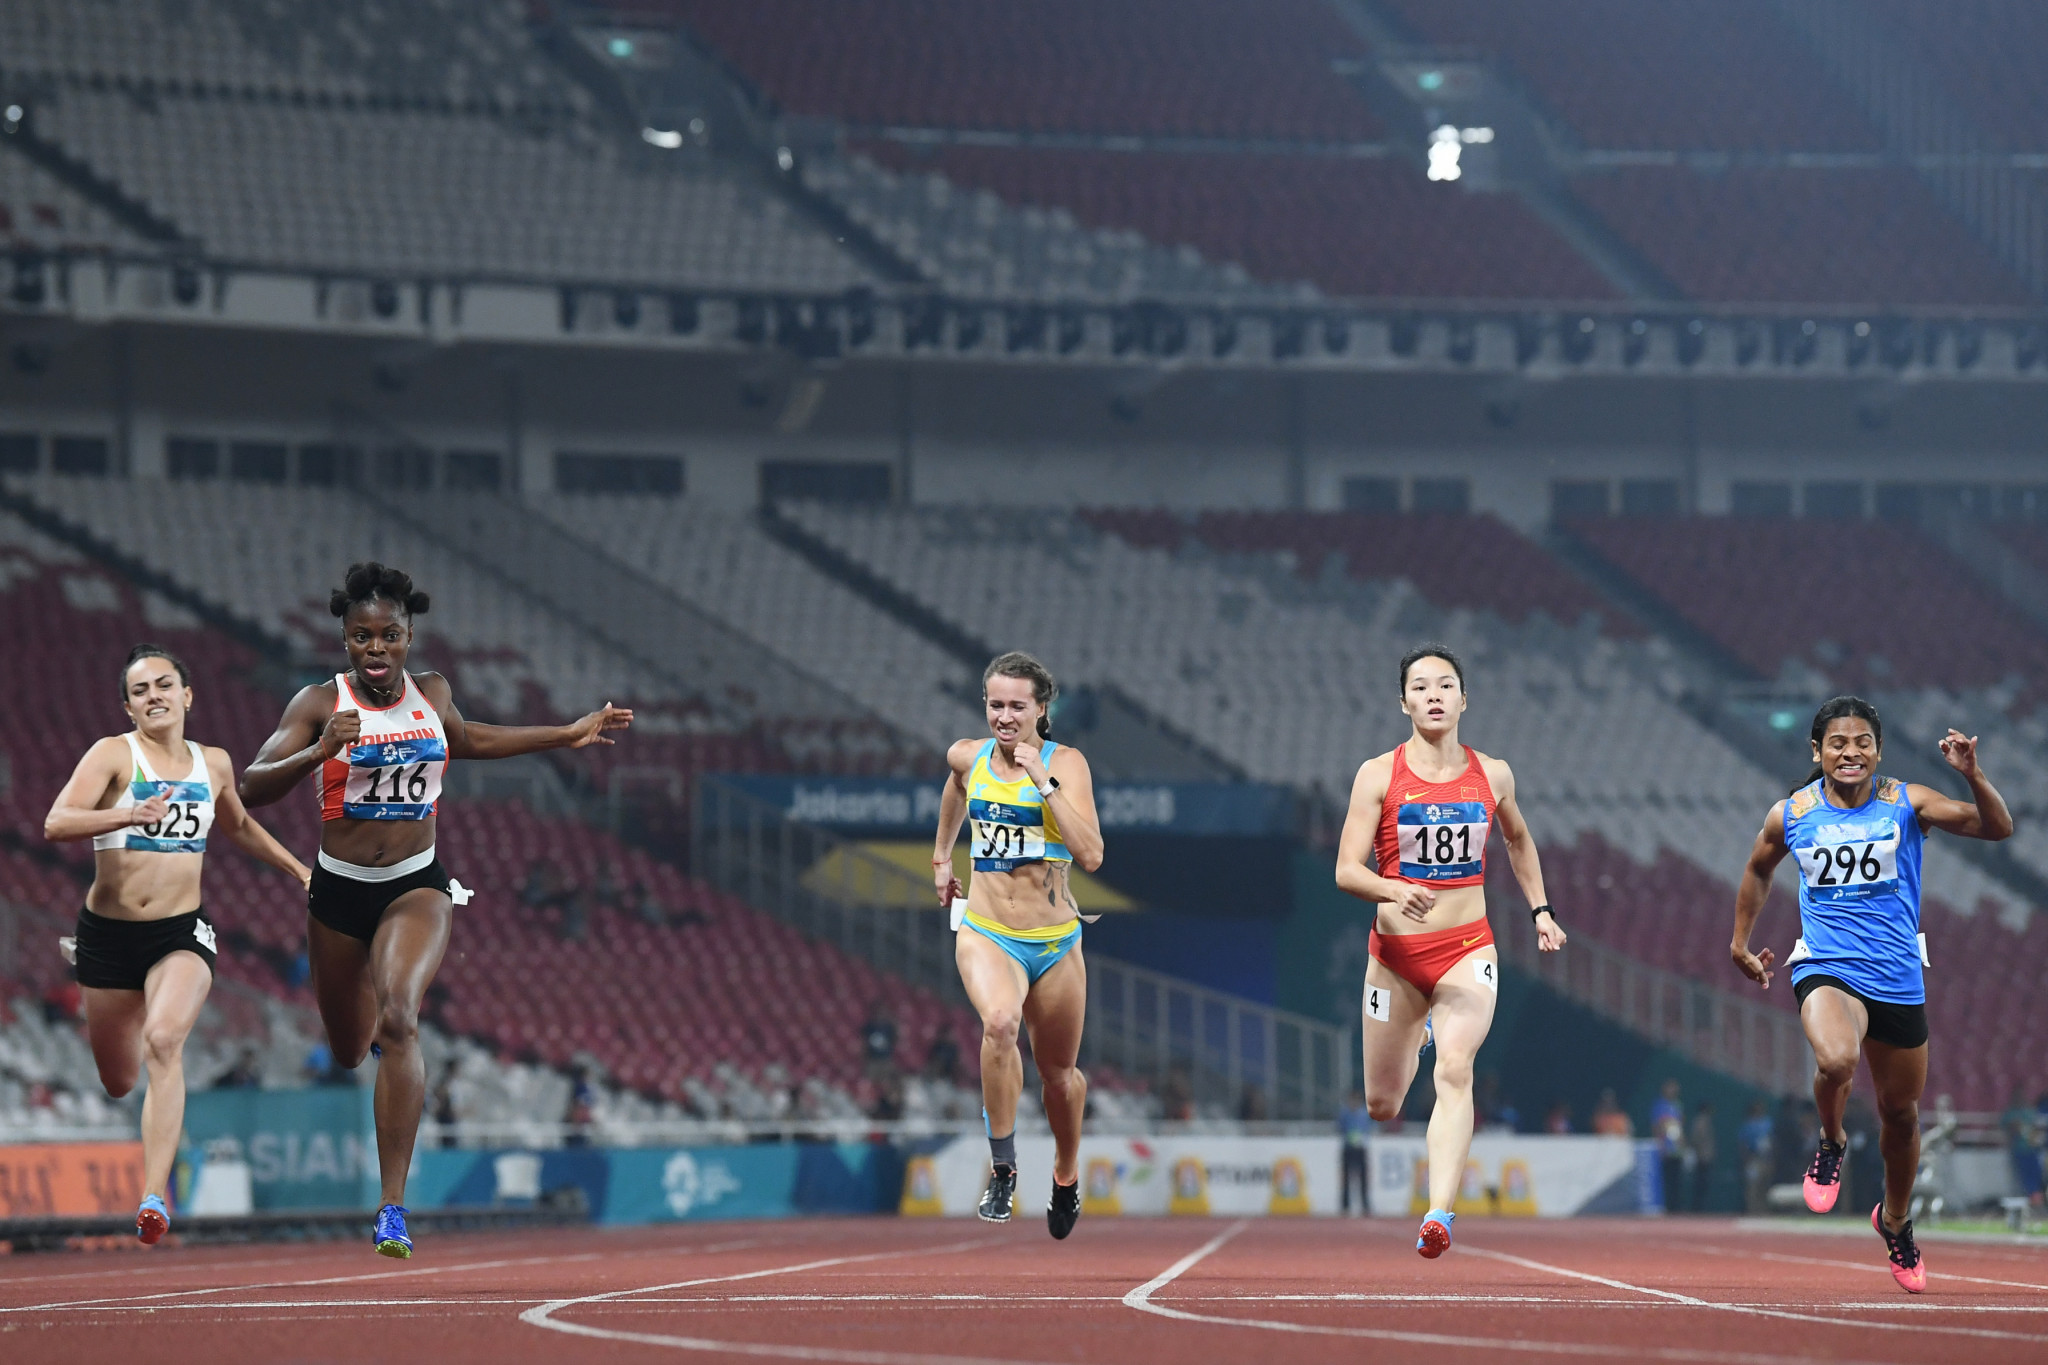 Odiong beats Chand again in women's 200 metres as Kioke wins dramatic men's final at Asian Games